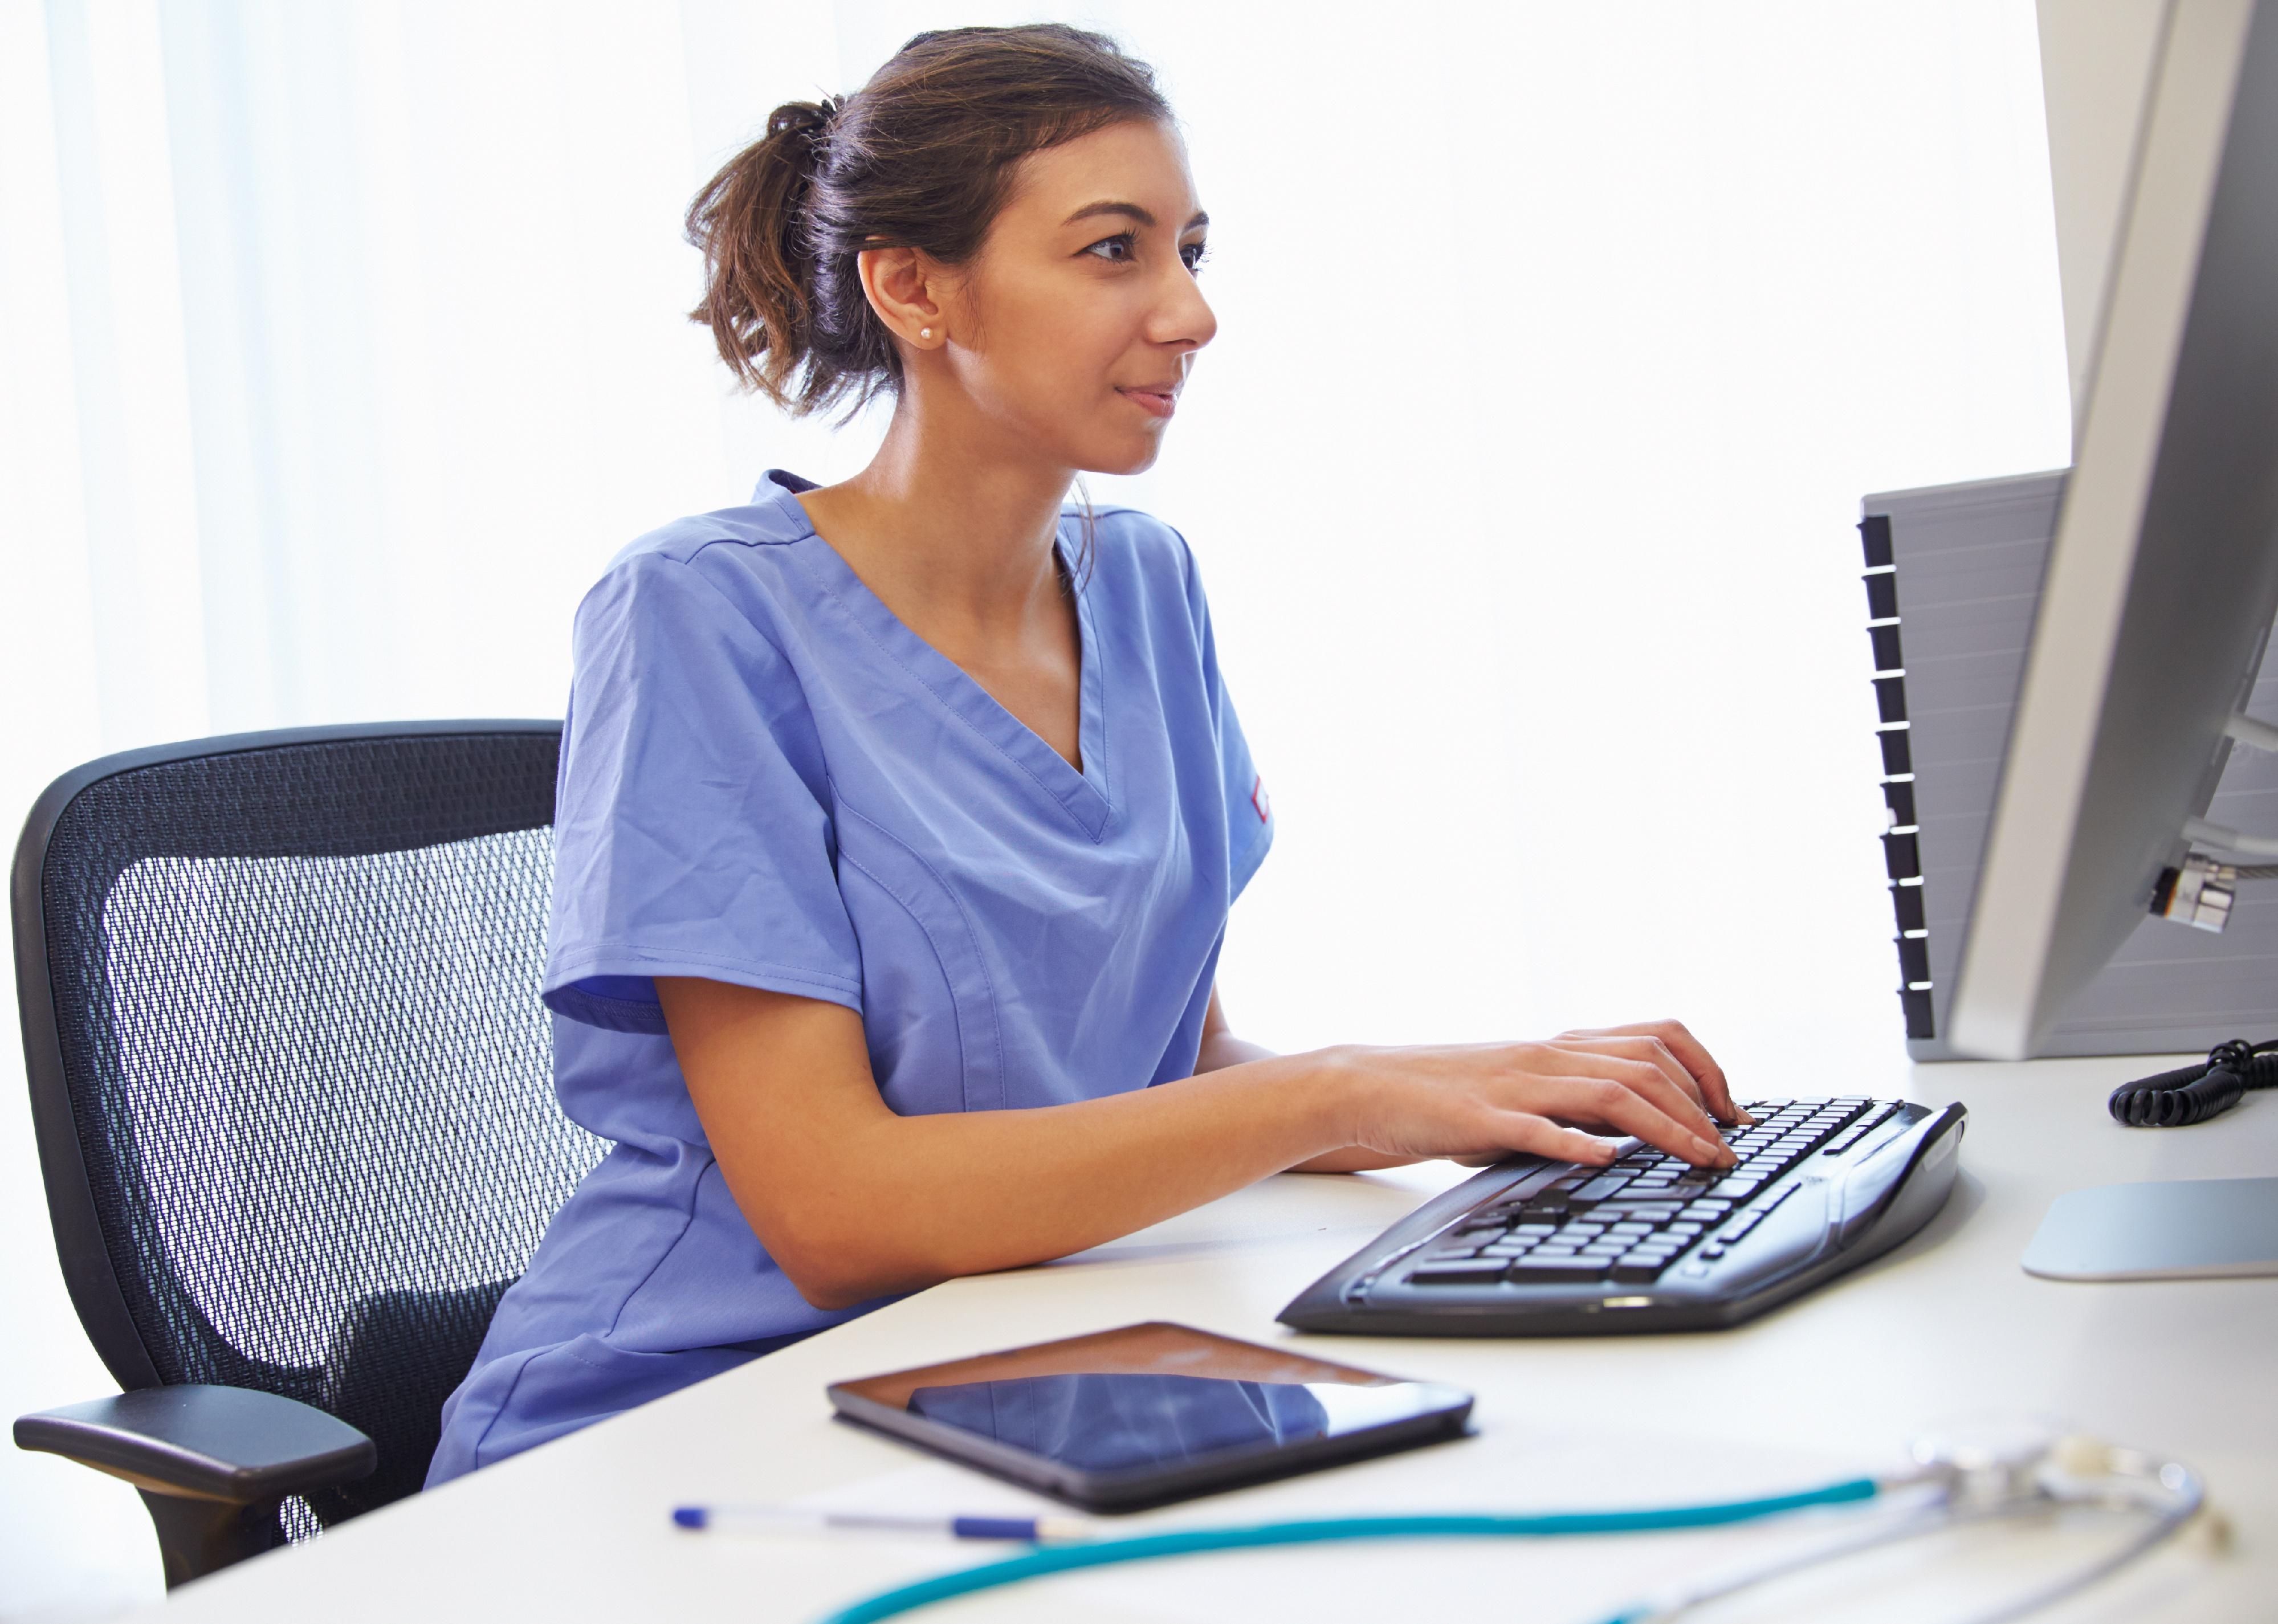 A women in scrubs at a computer.